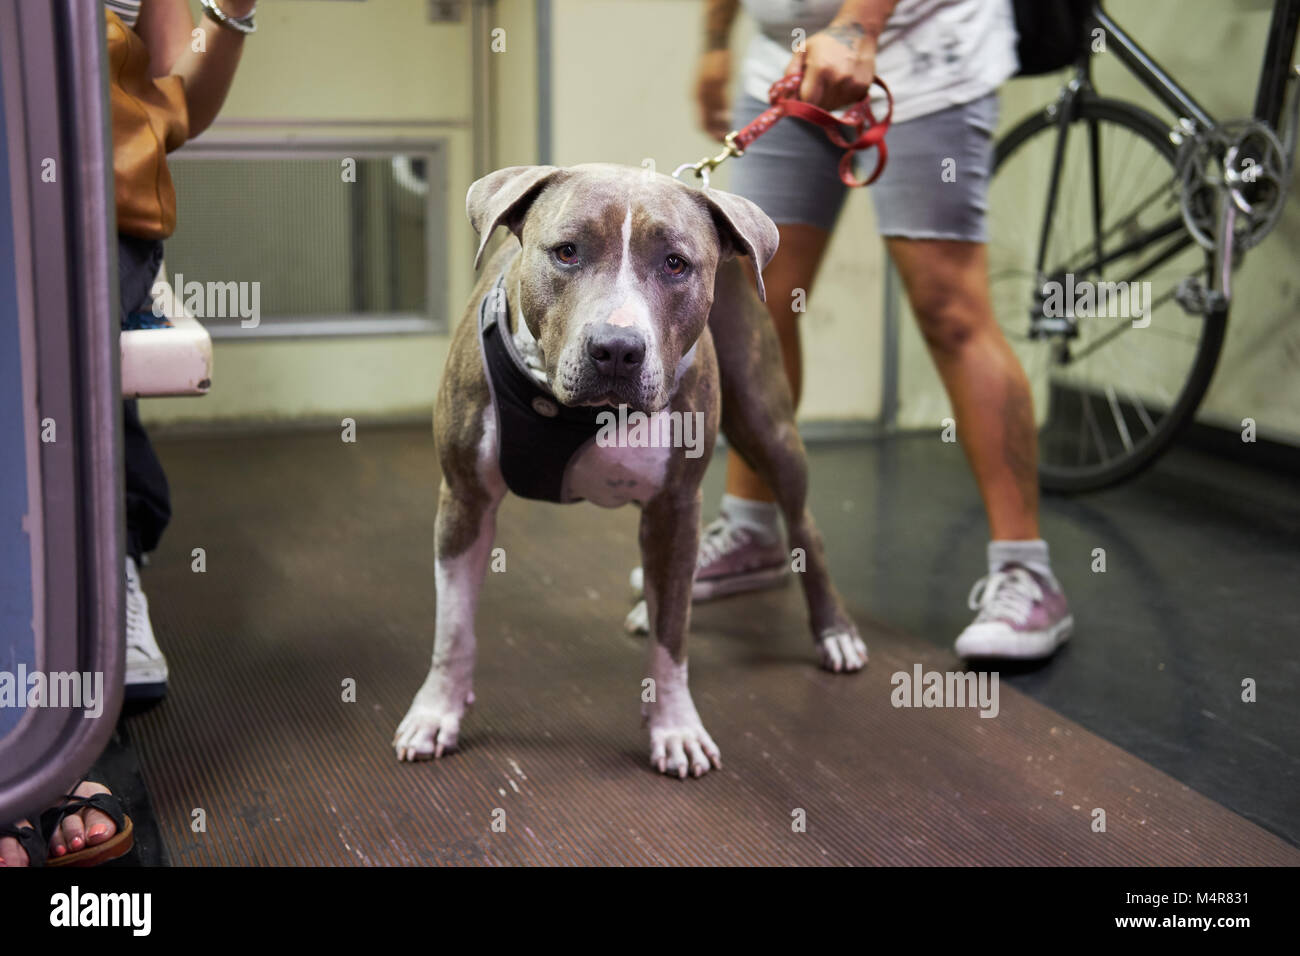 Cute dog on subway train Stock Photo